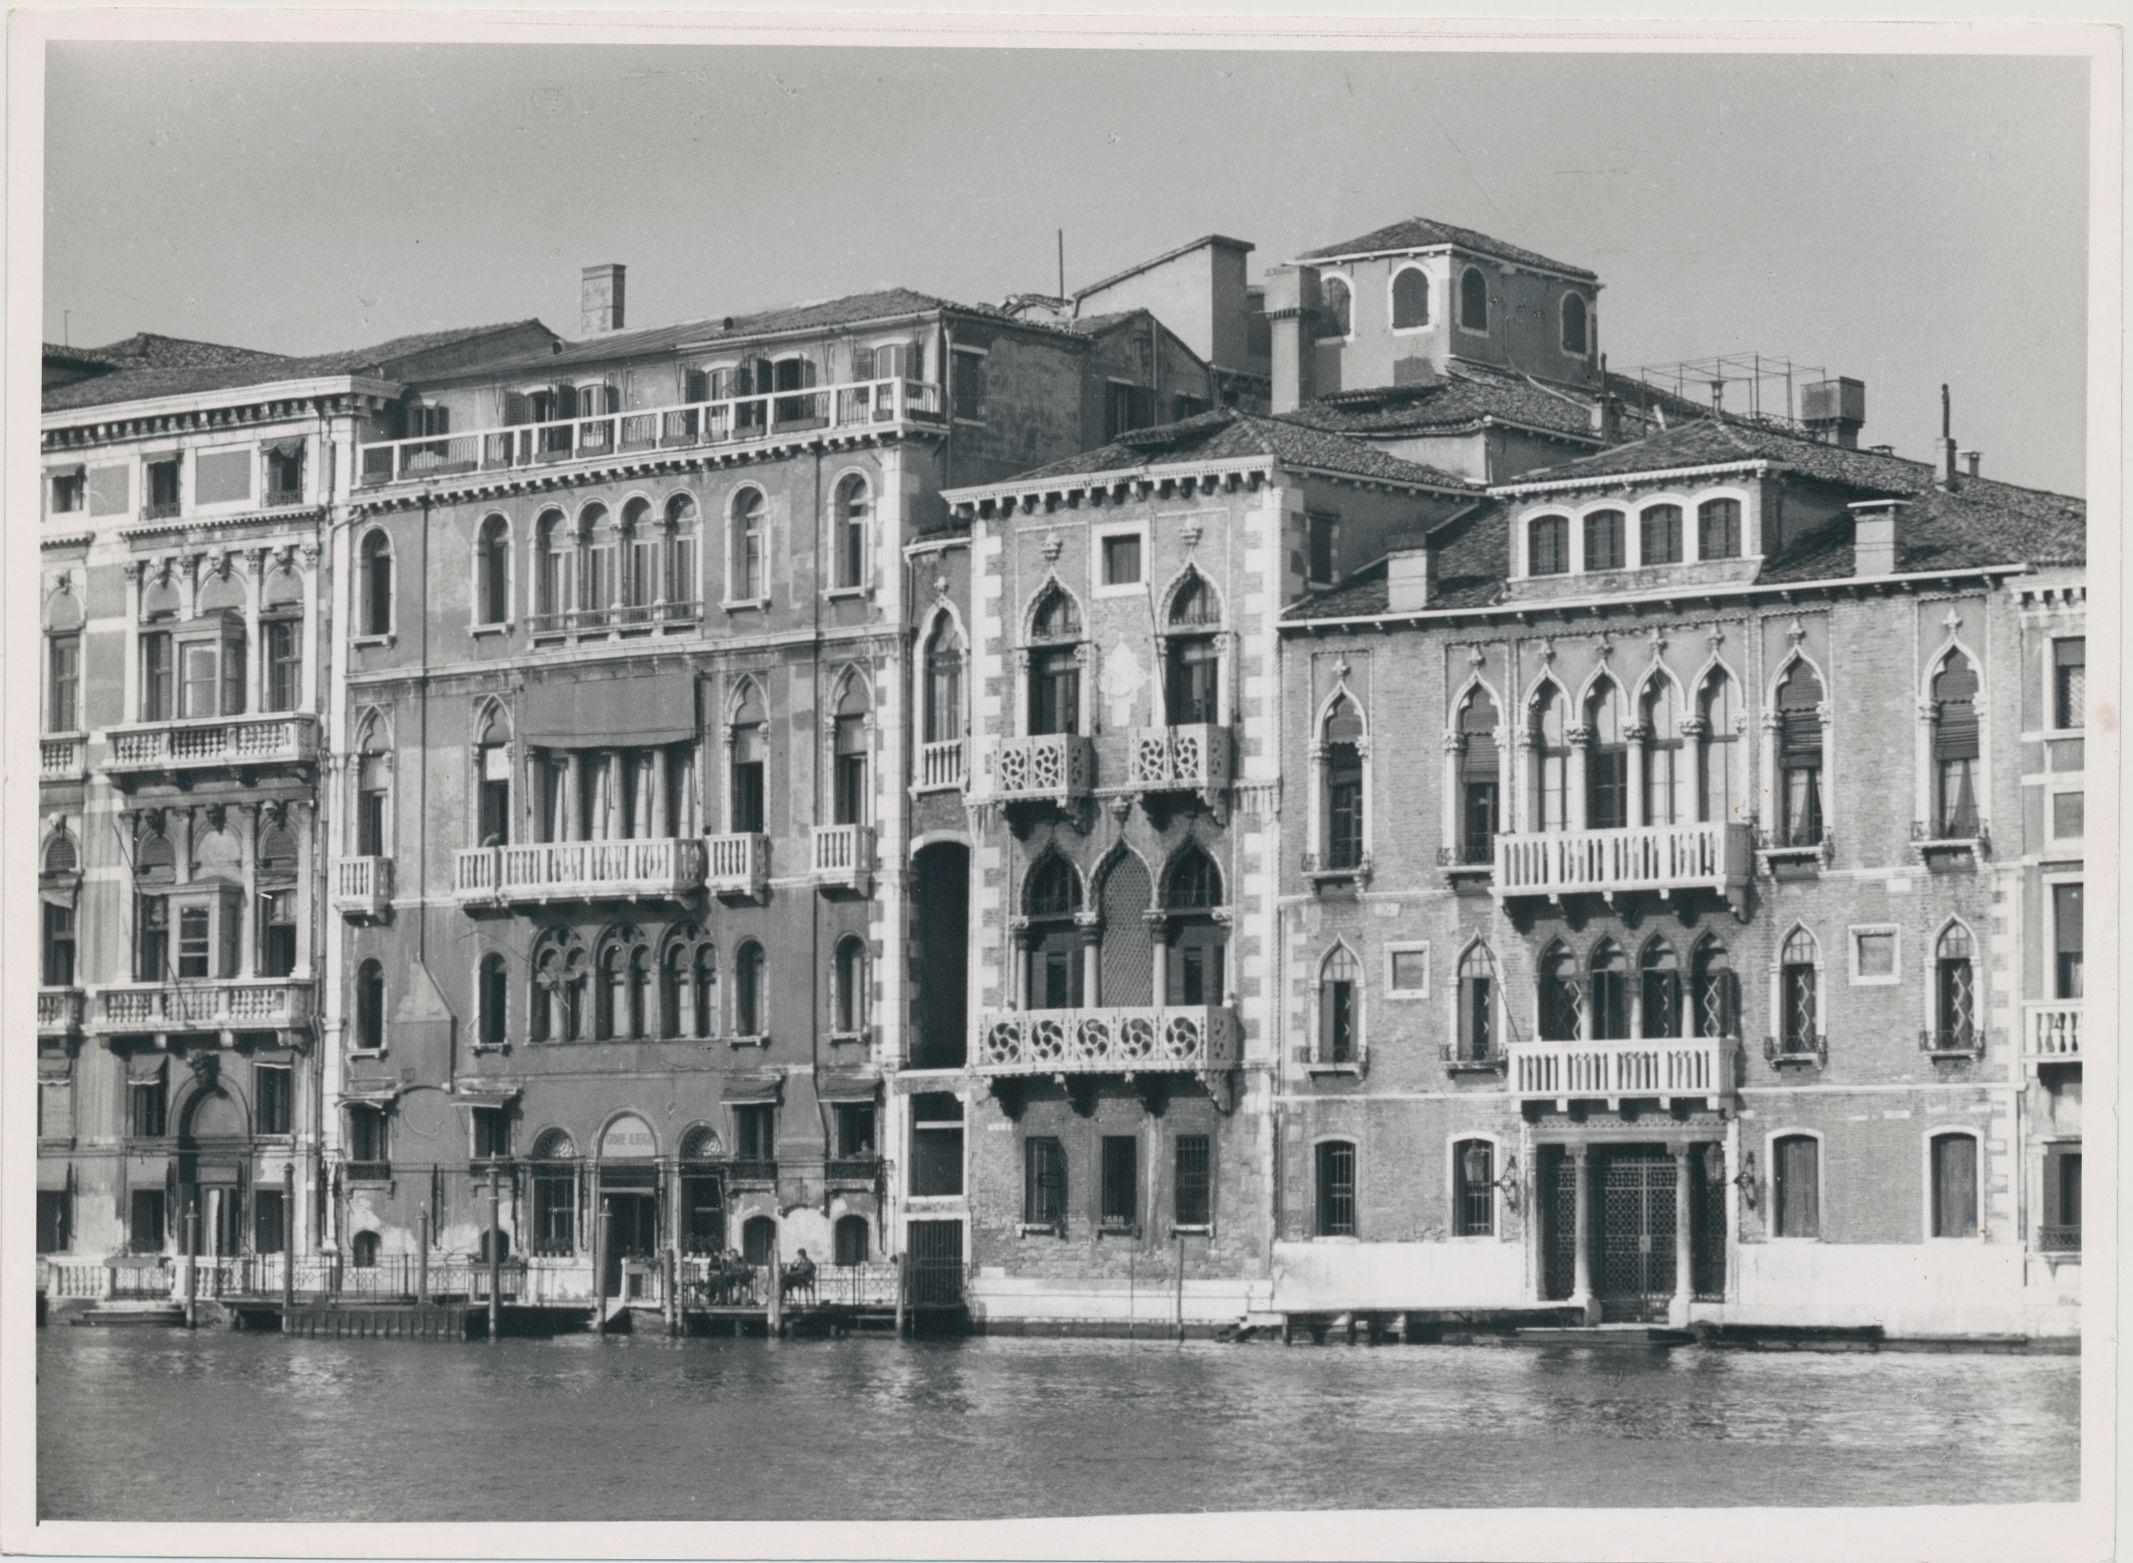 Erich Andres Landscape Photograph - Venice, Venedig, Canale Grande, Italy 1950s, 13 x 17, 9 cm